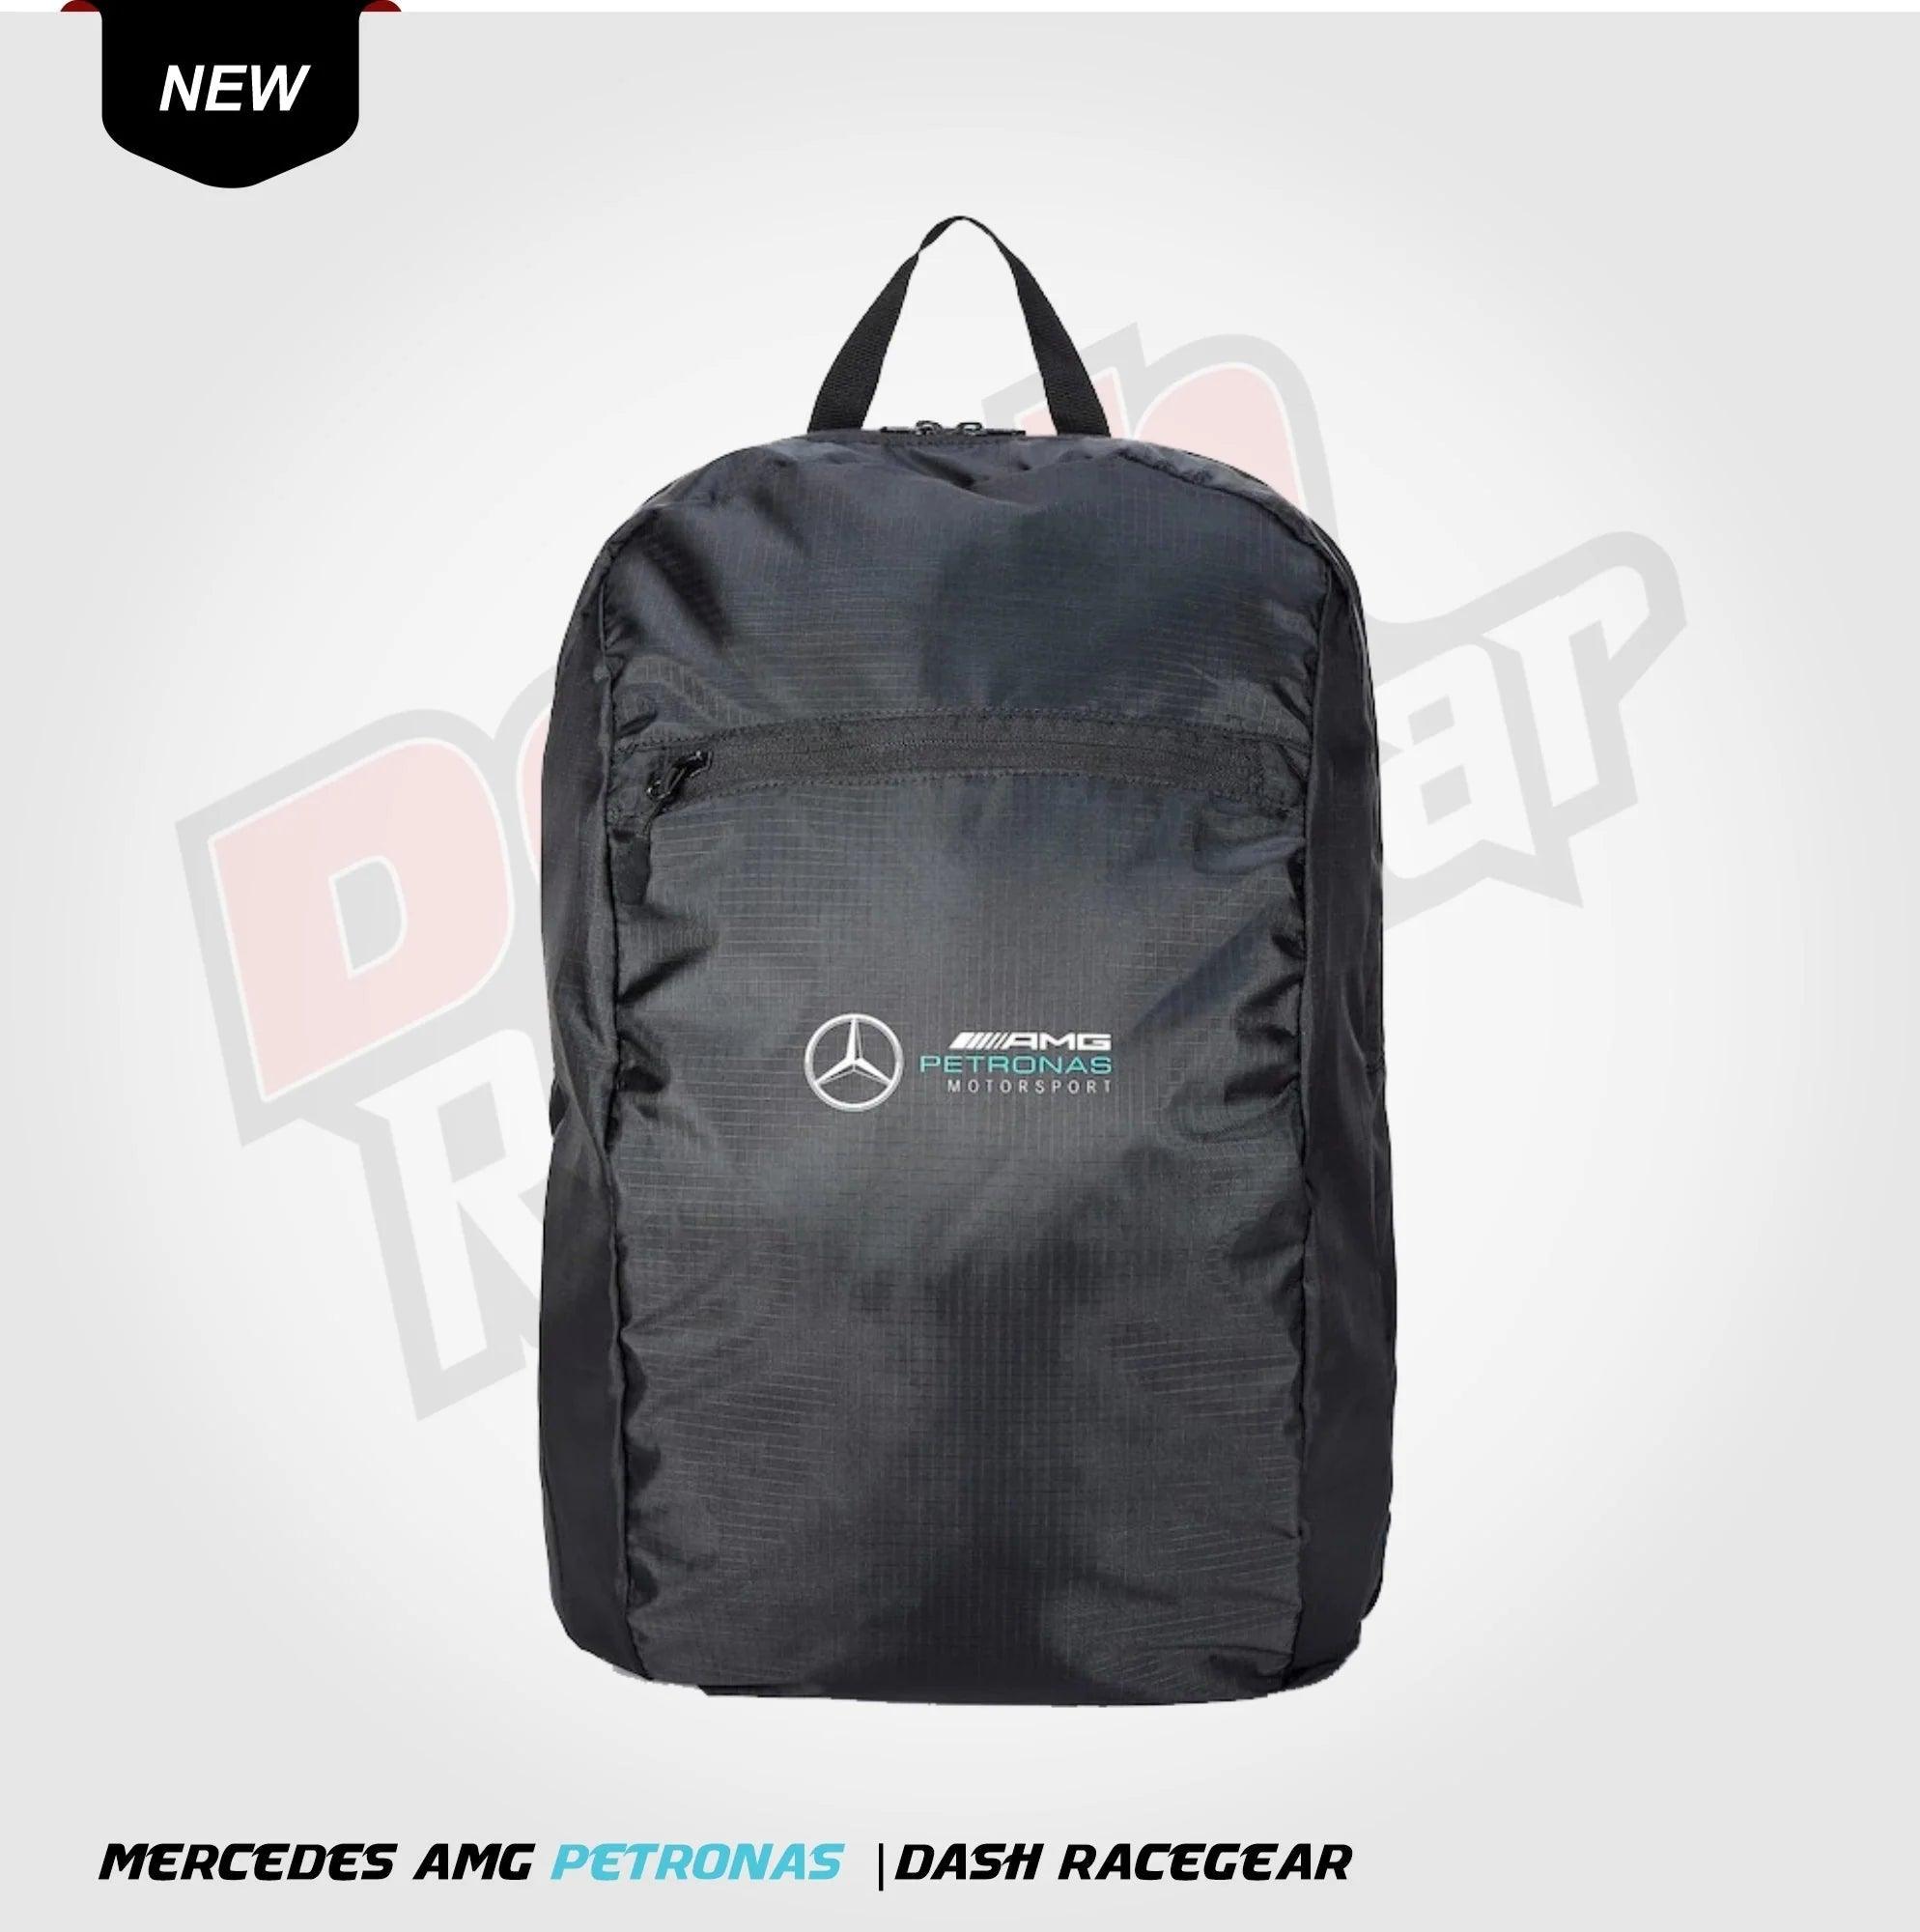 Mercedes AMG Petronas Backpack - Dash Racegear 